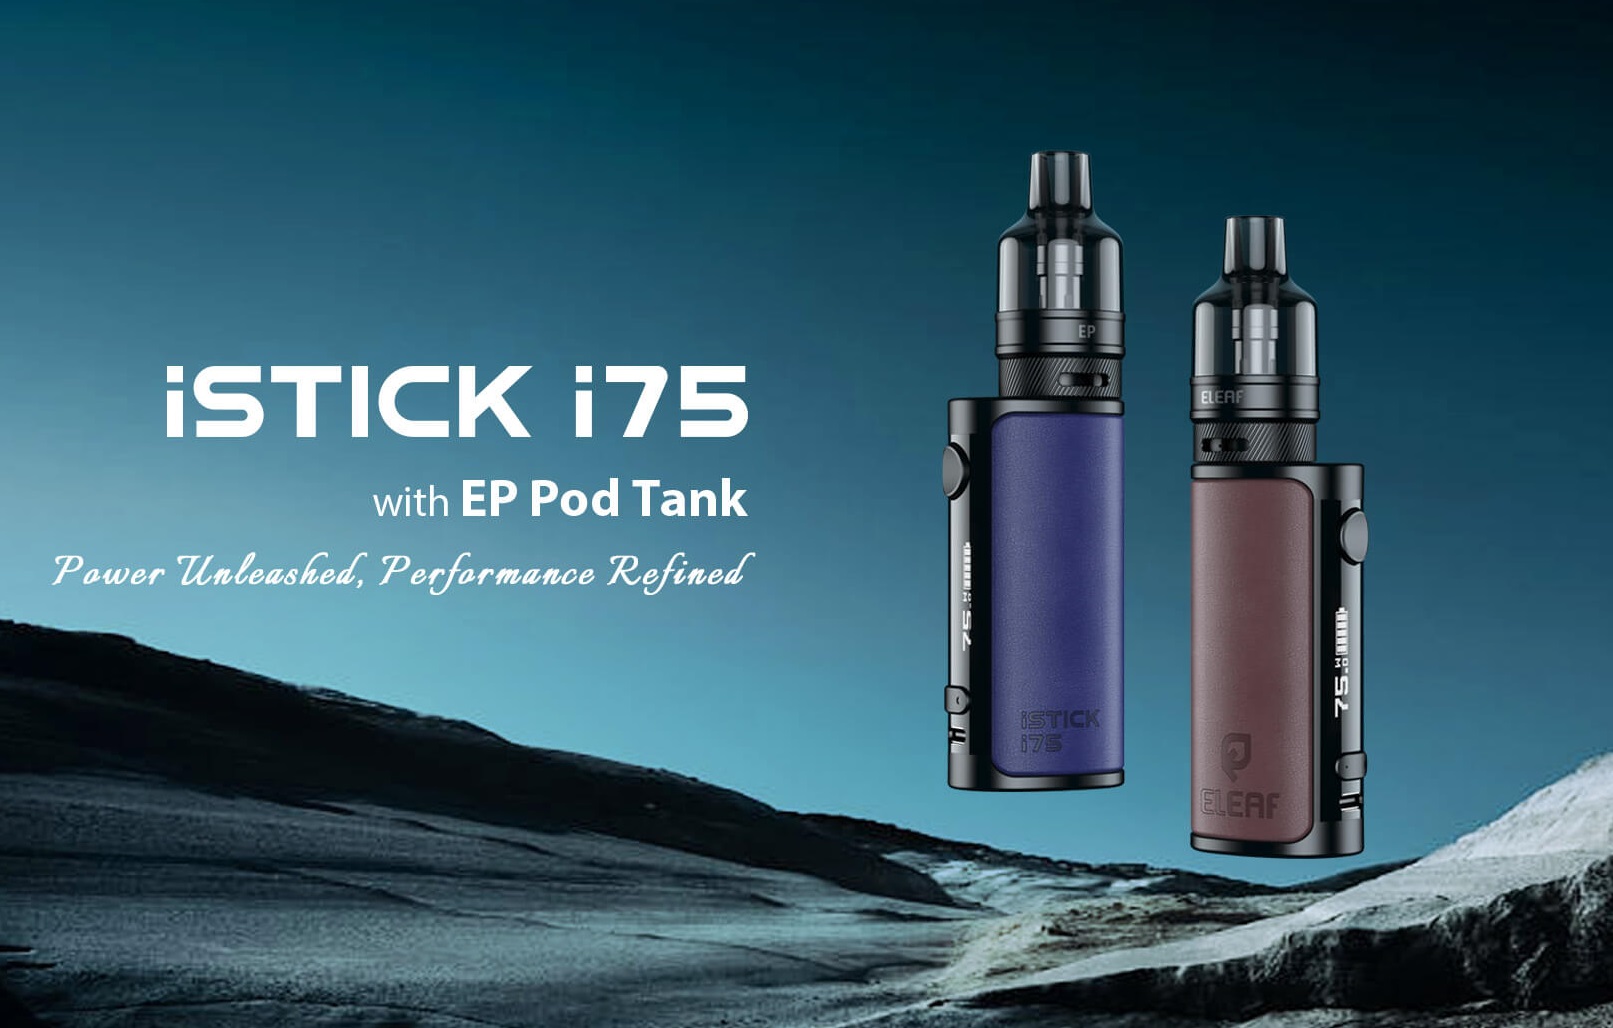 Eleaf iStick i75 kit